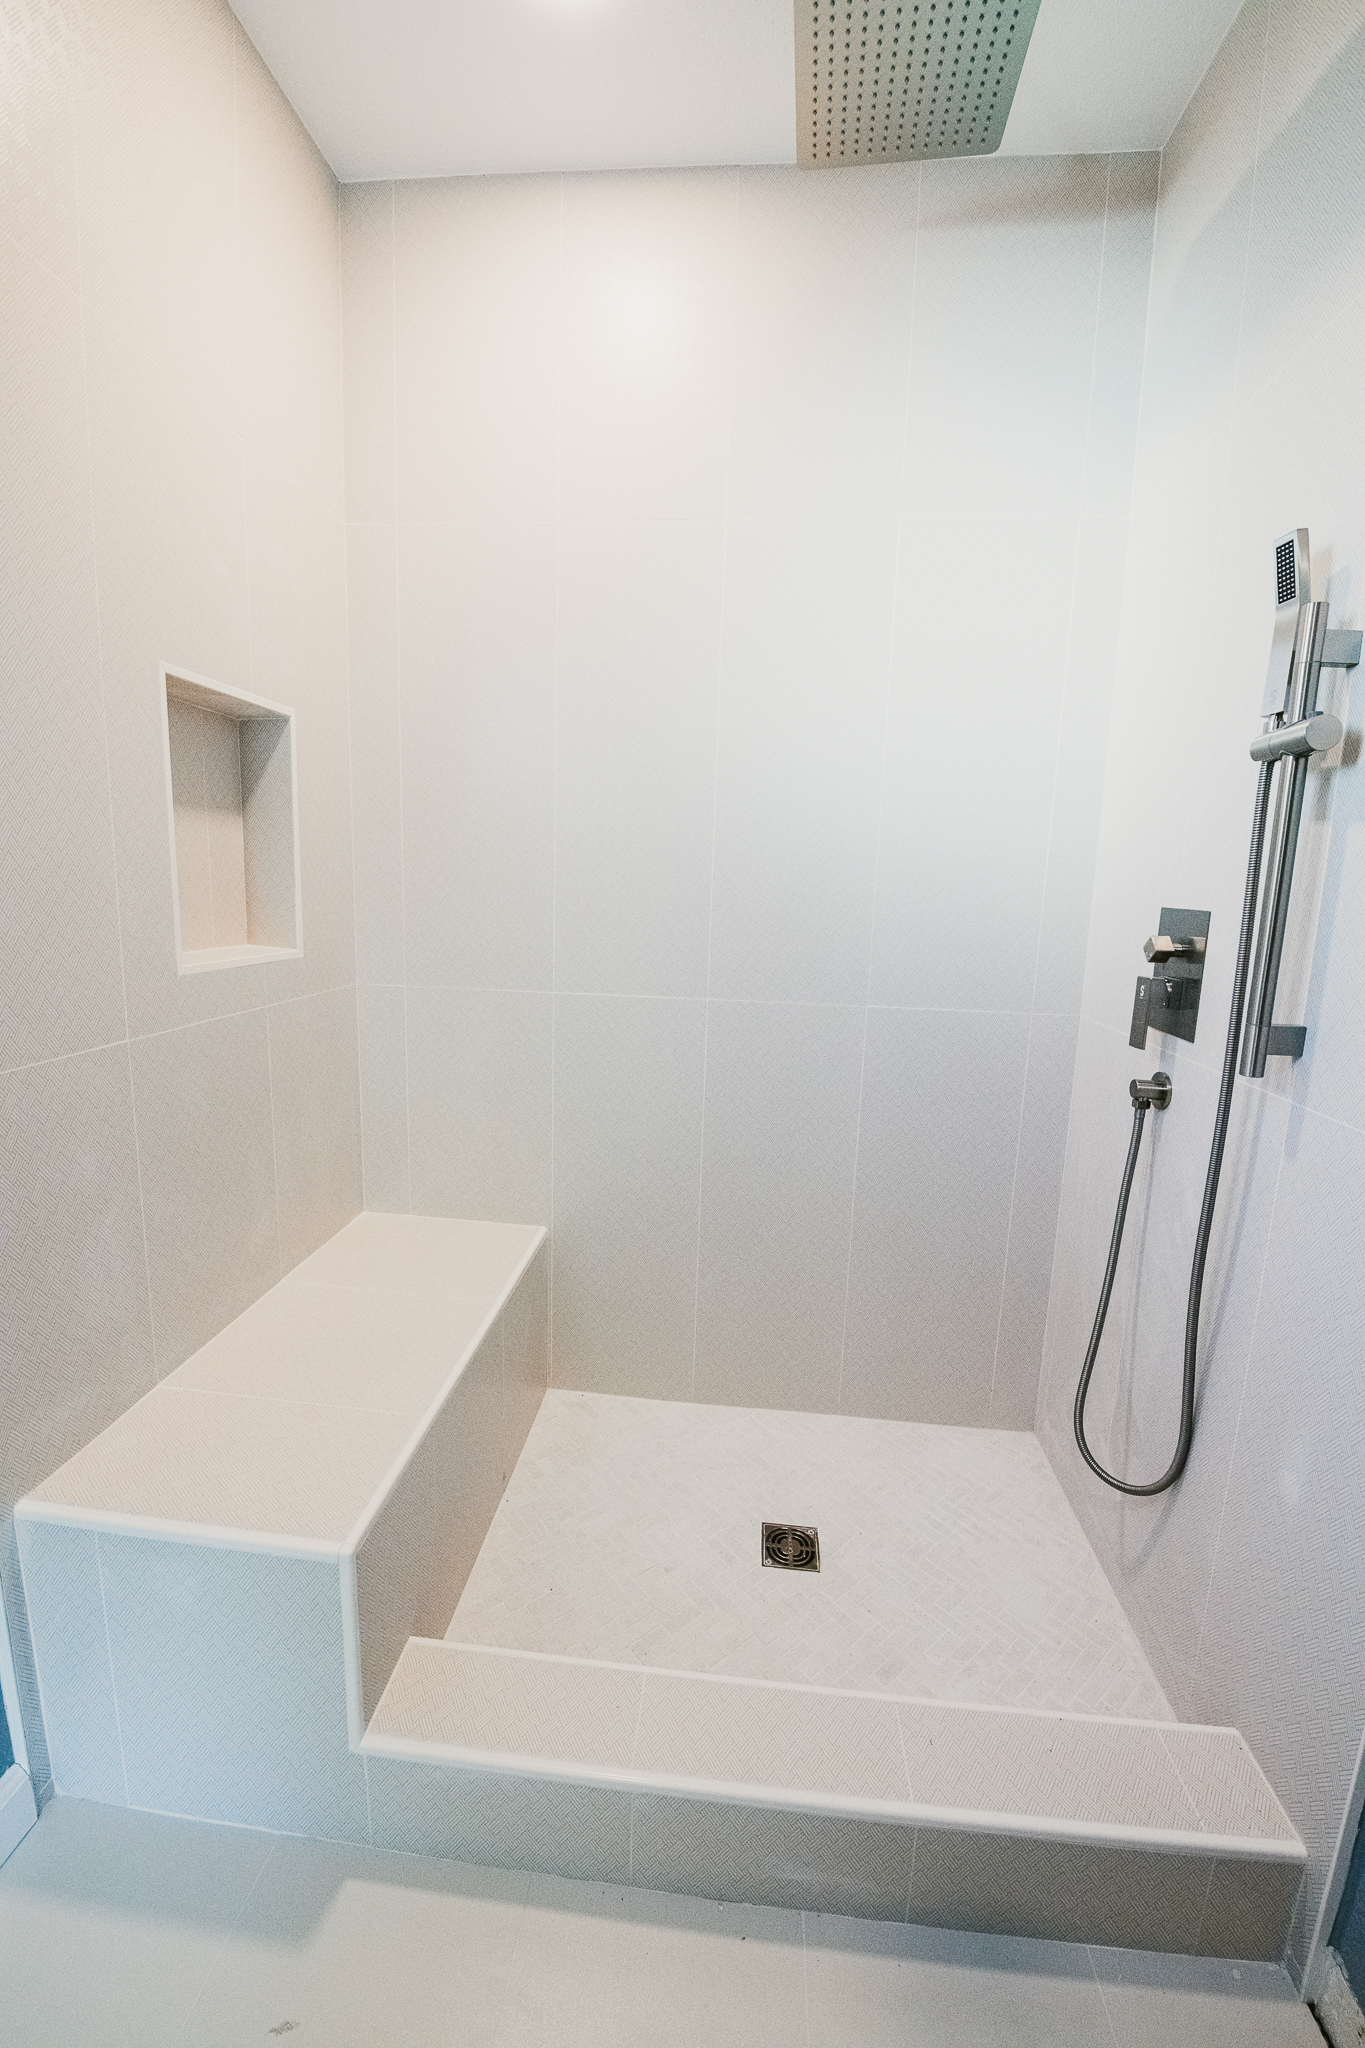 Imagine Unique Remodels - bathroom waterproofing